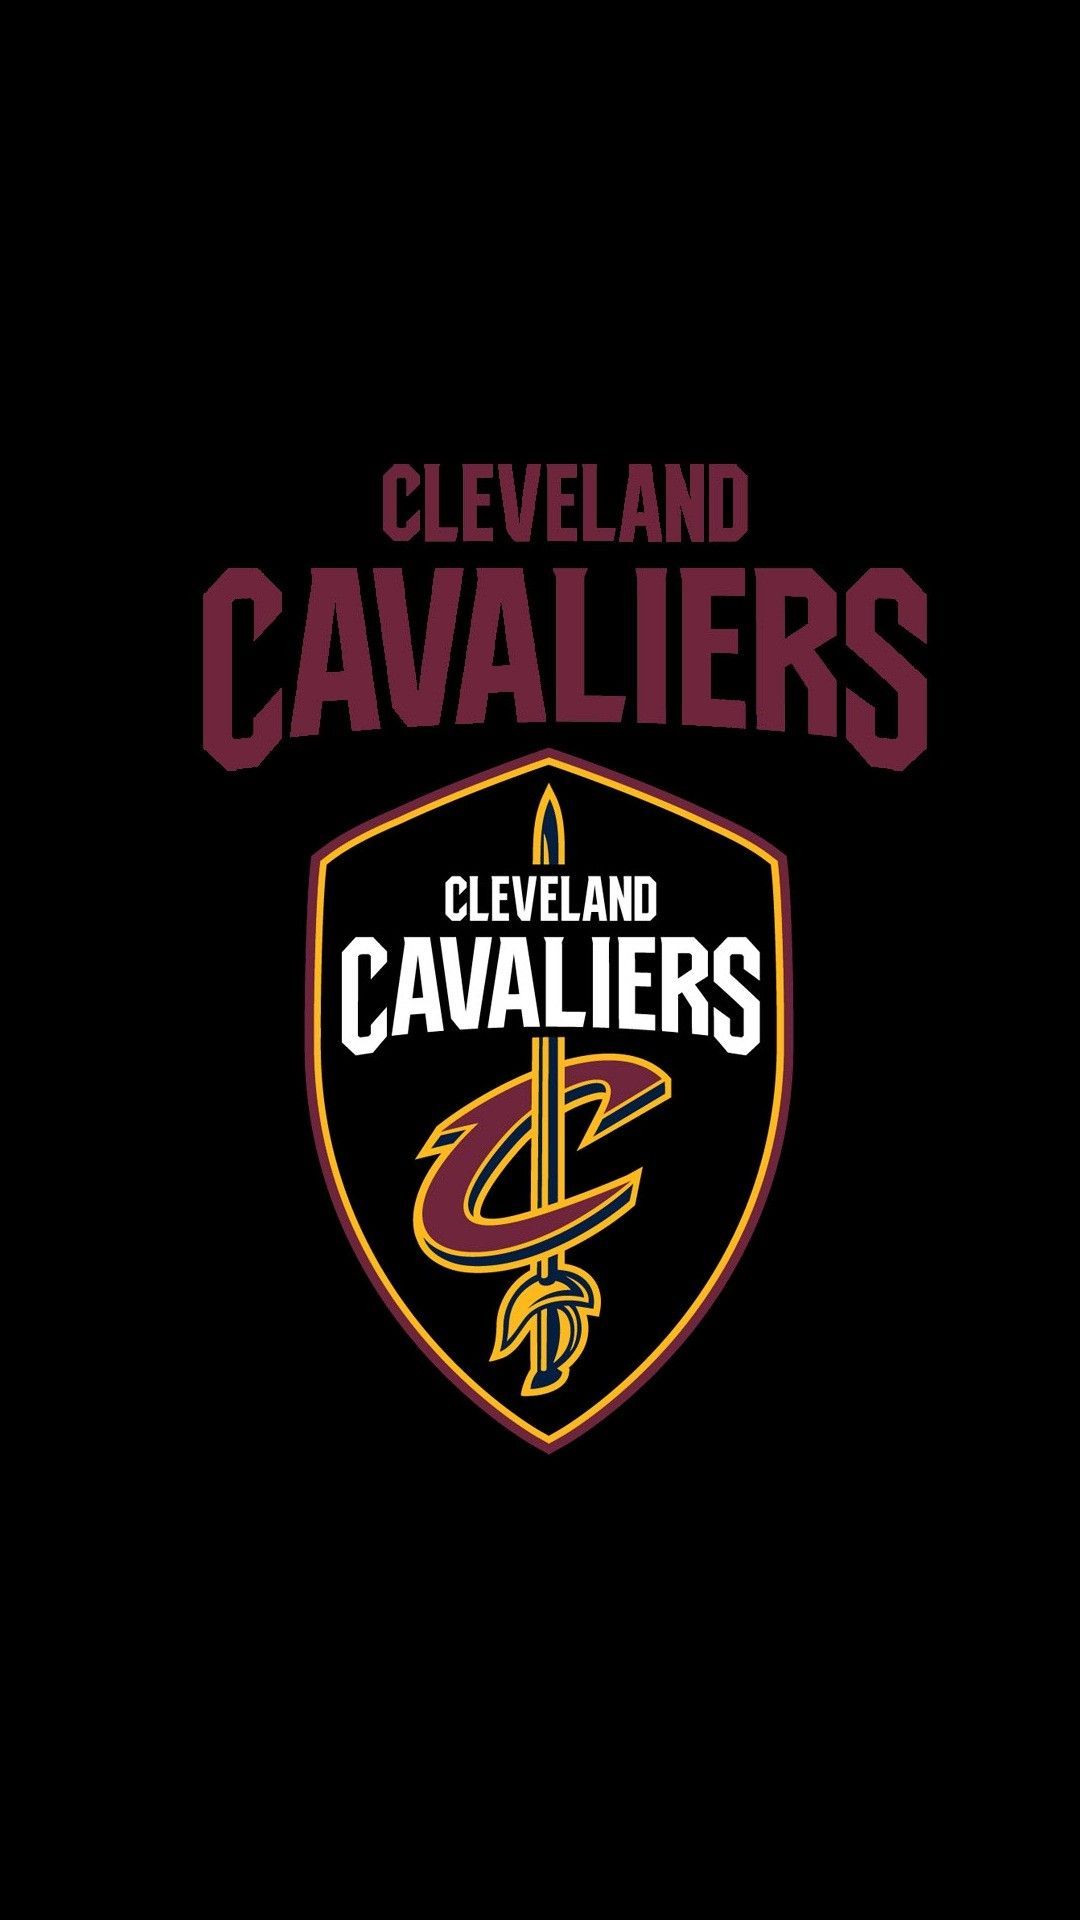 Cleveland Cavaliers NBA Wallpaper iPhone HD Basketball Wallpaper. Cavaliers nba, Cavaliers wallpaper, Nba lebron james